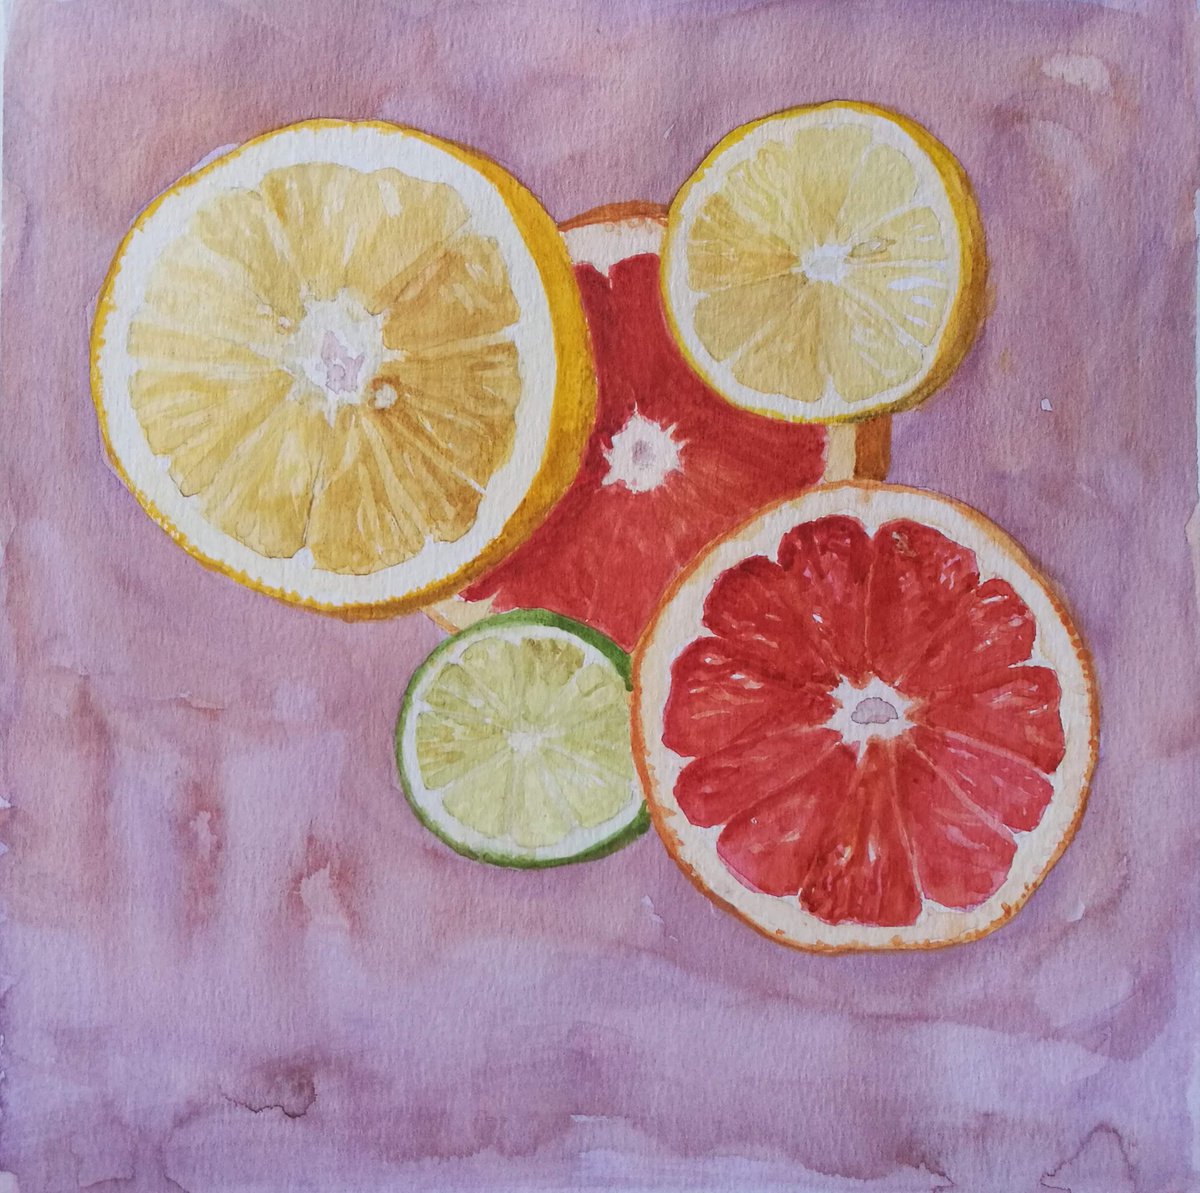 A splash of citrus by Daniela Roughsedge